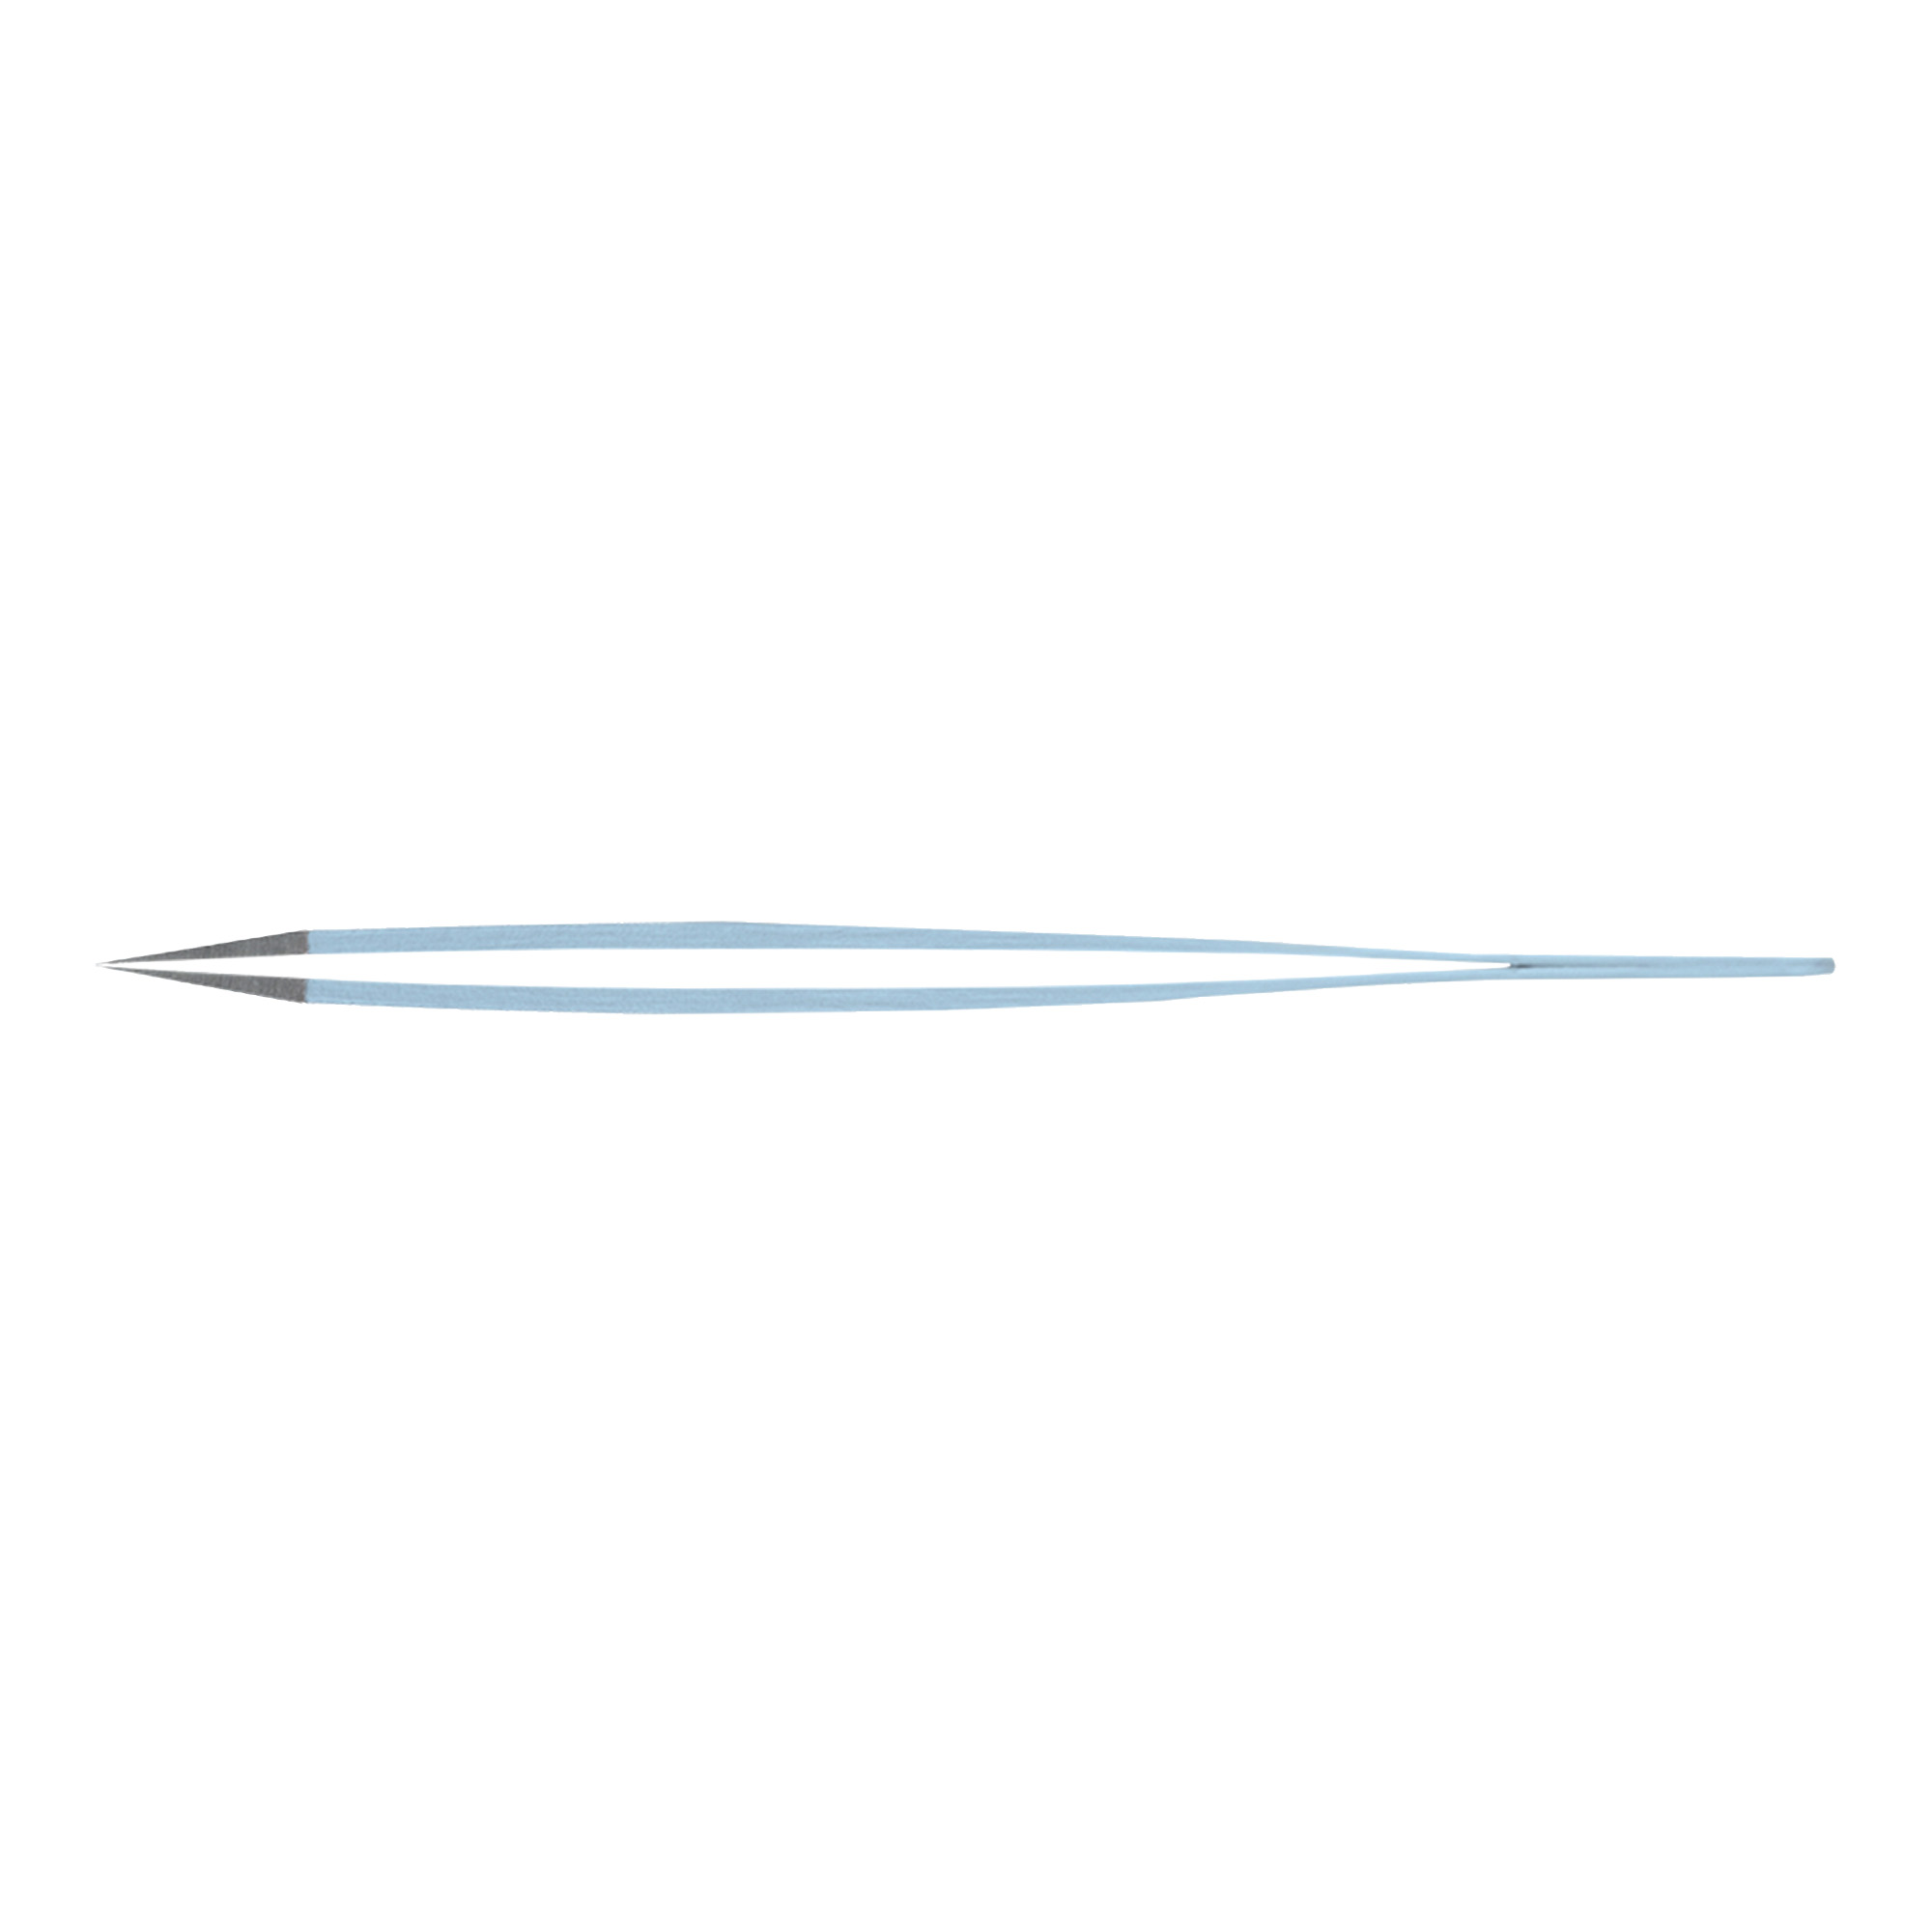 Rubis sharp-tipped stainless steel tweezers light blue